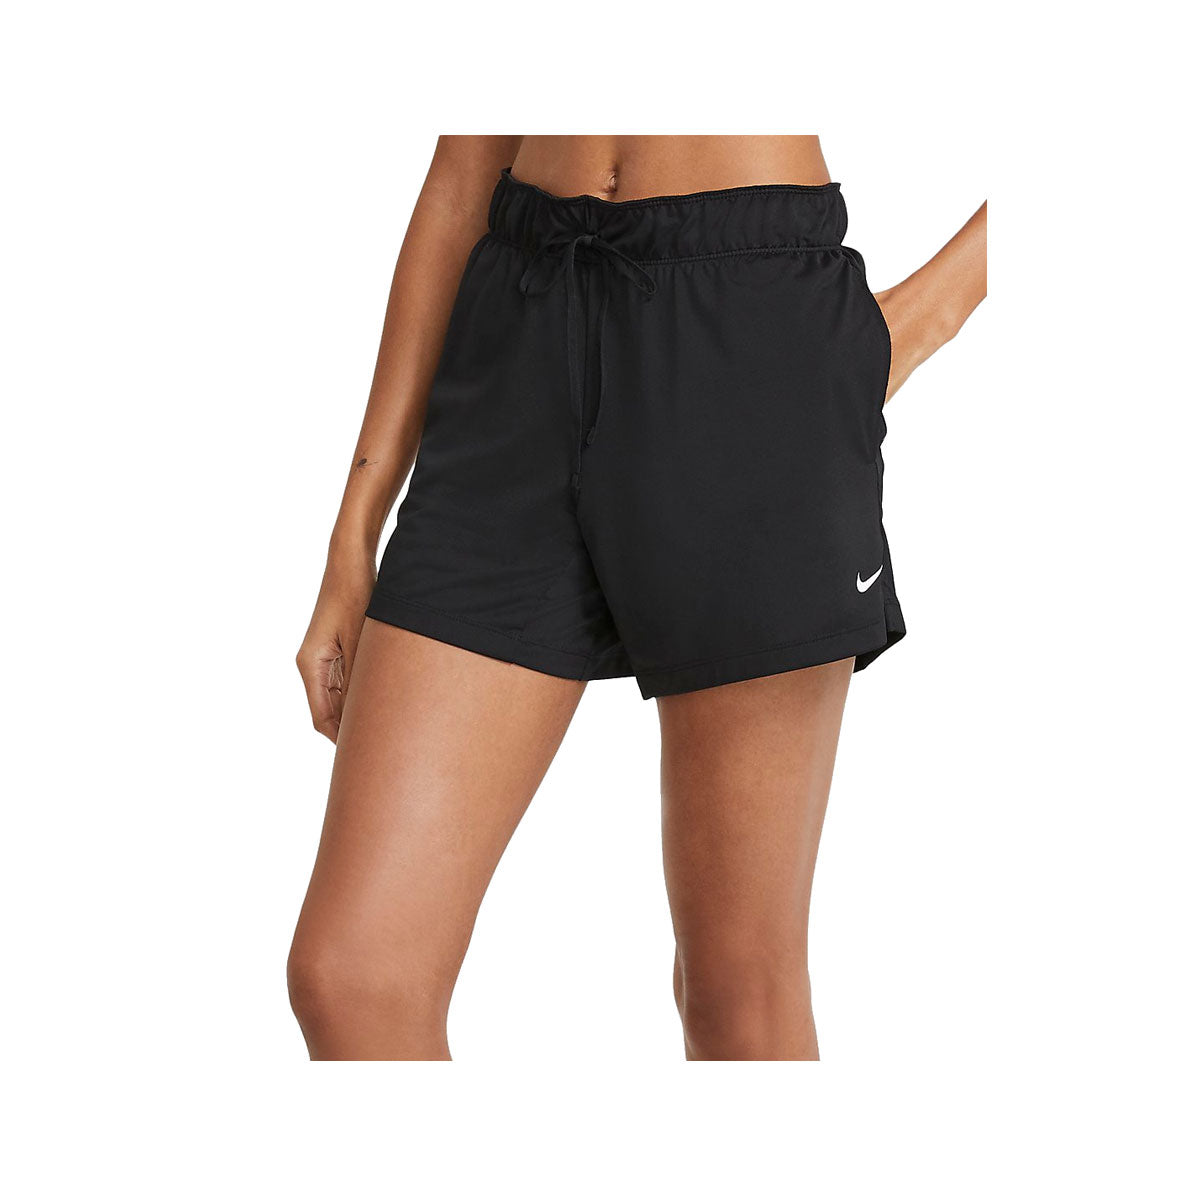 Nike Women's Dri-FIT Shorts Attack Short Athletic